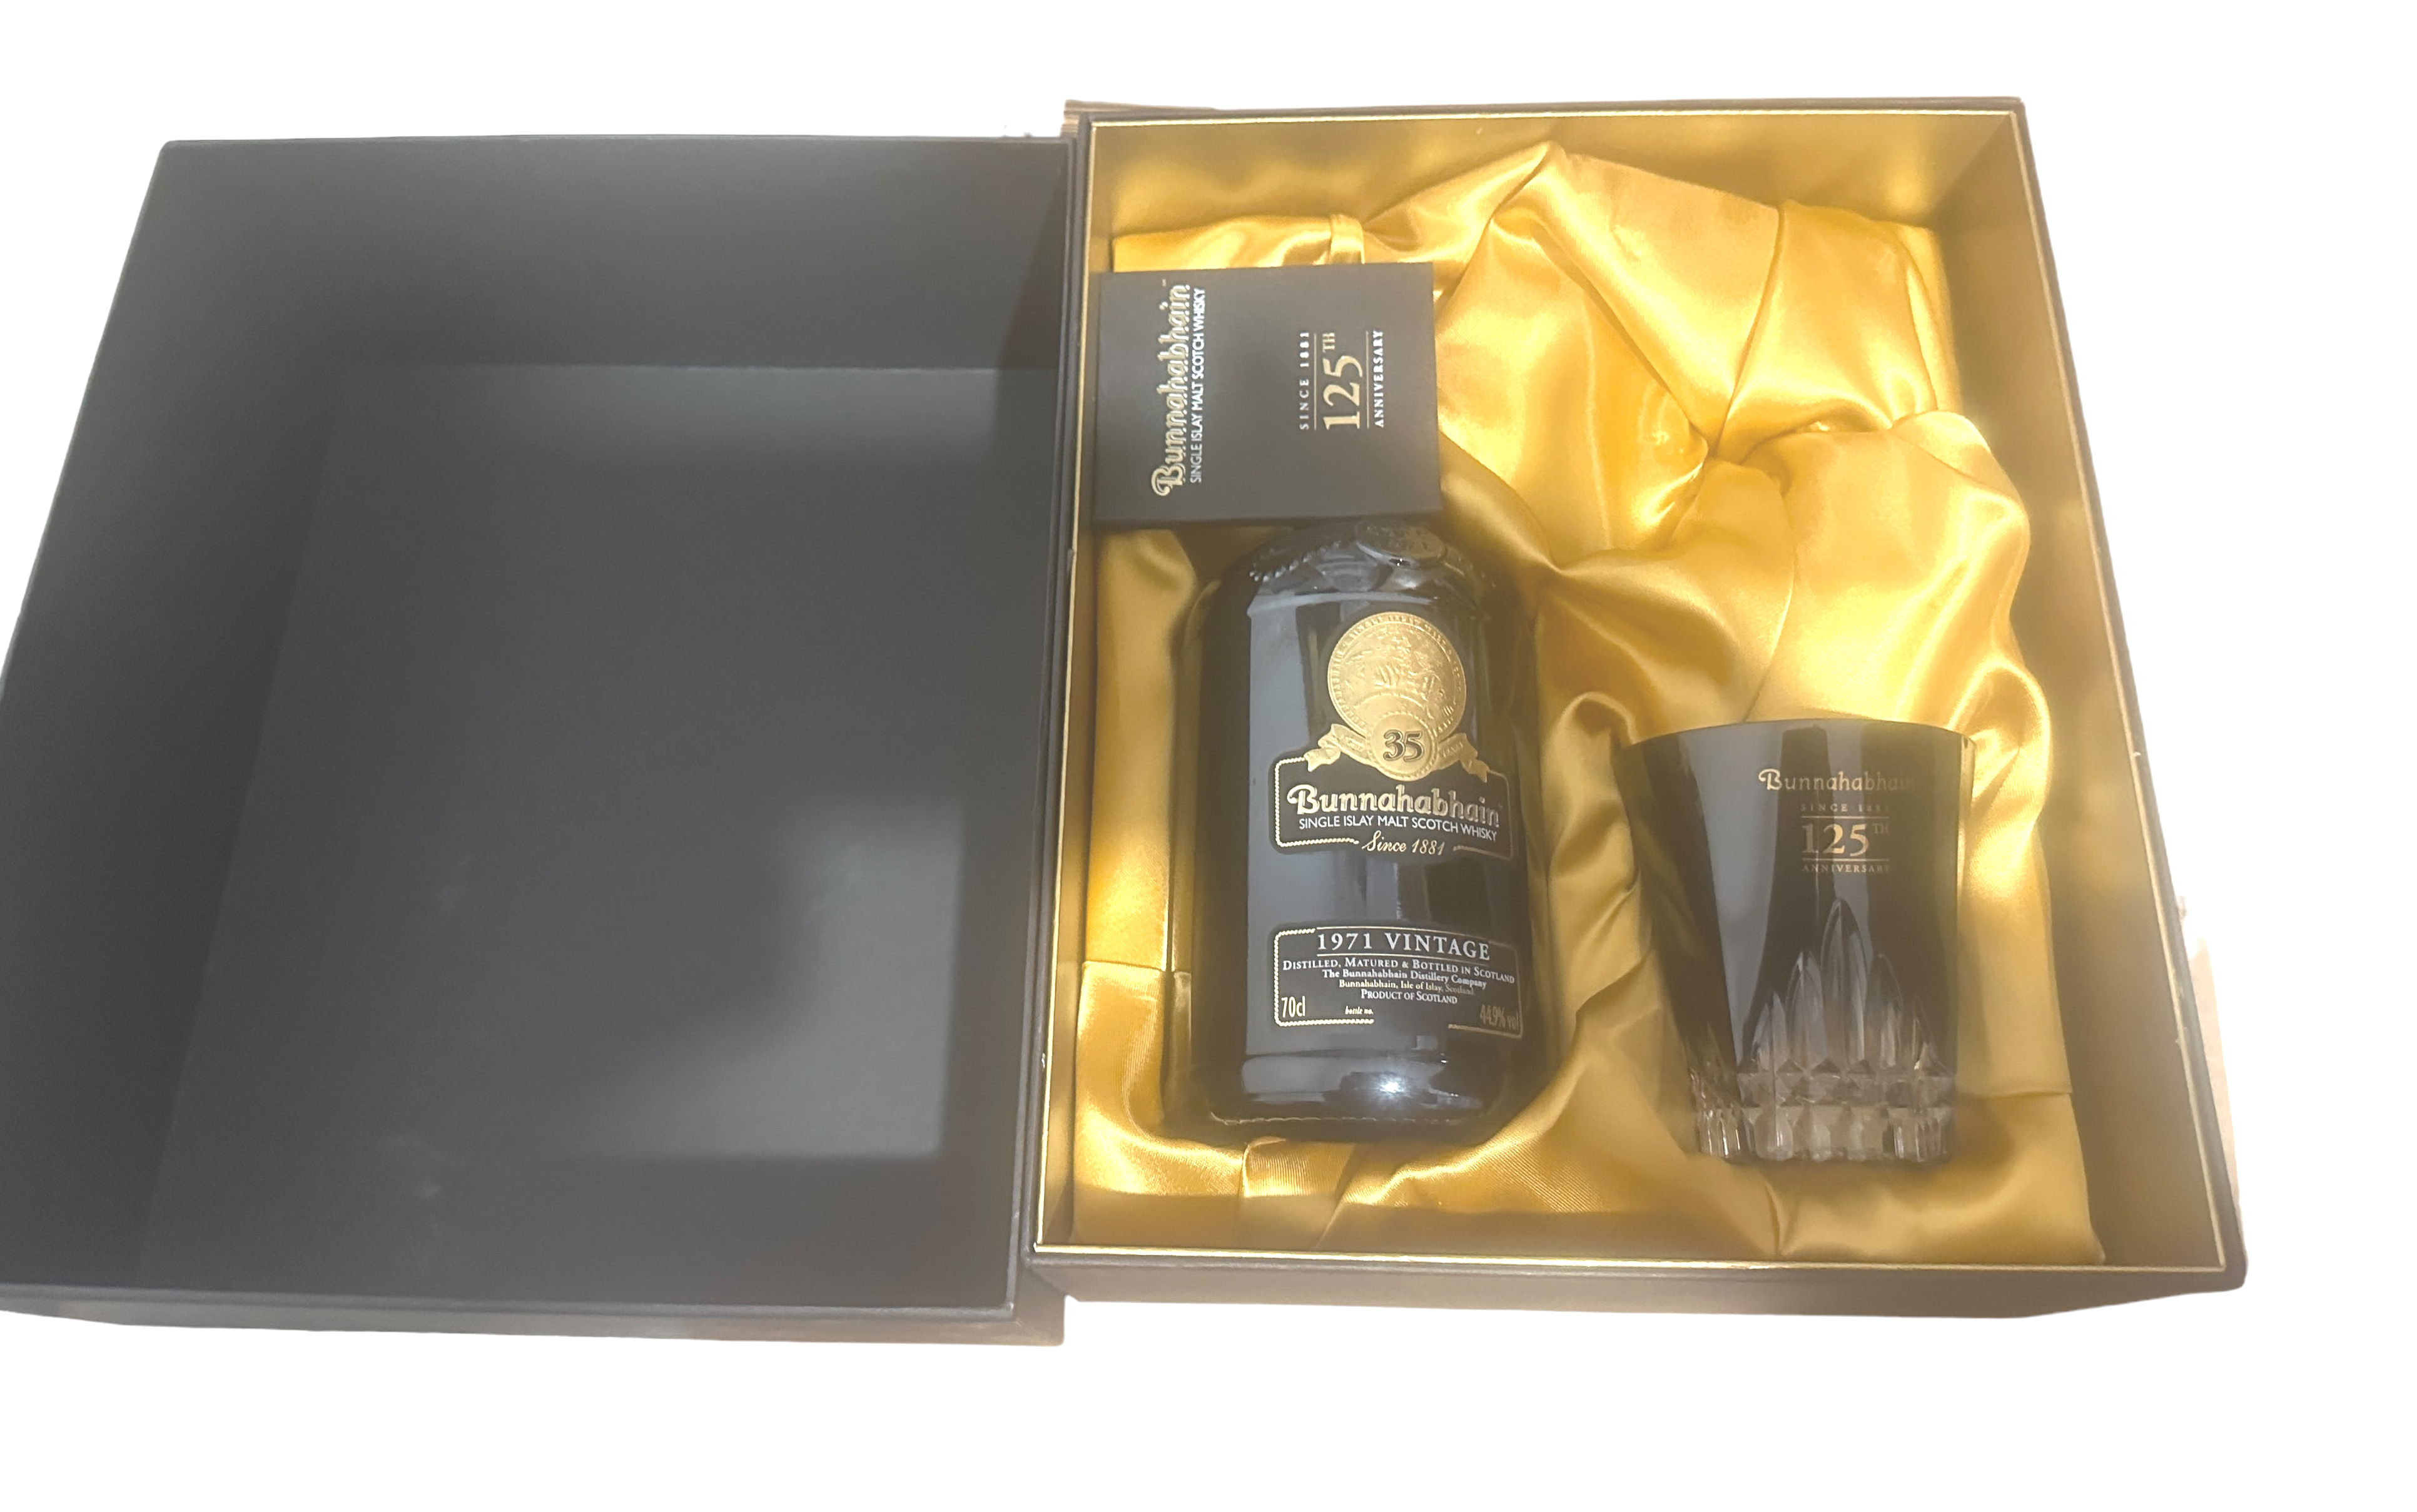 Boxed Bunnahabhain Single Islay Malt Scotch Whisky 1971 - 125th Anniversary Set. - Image 2 of 7